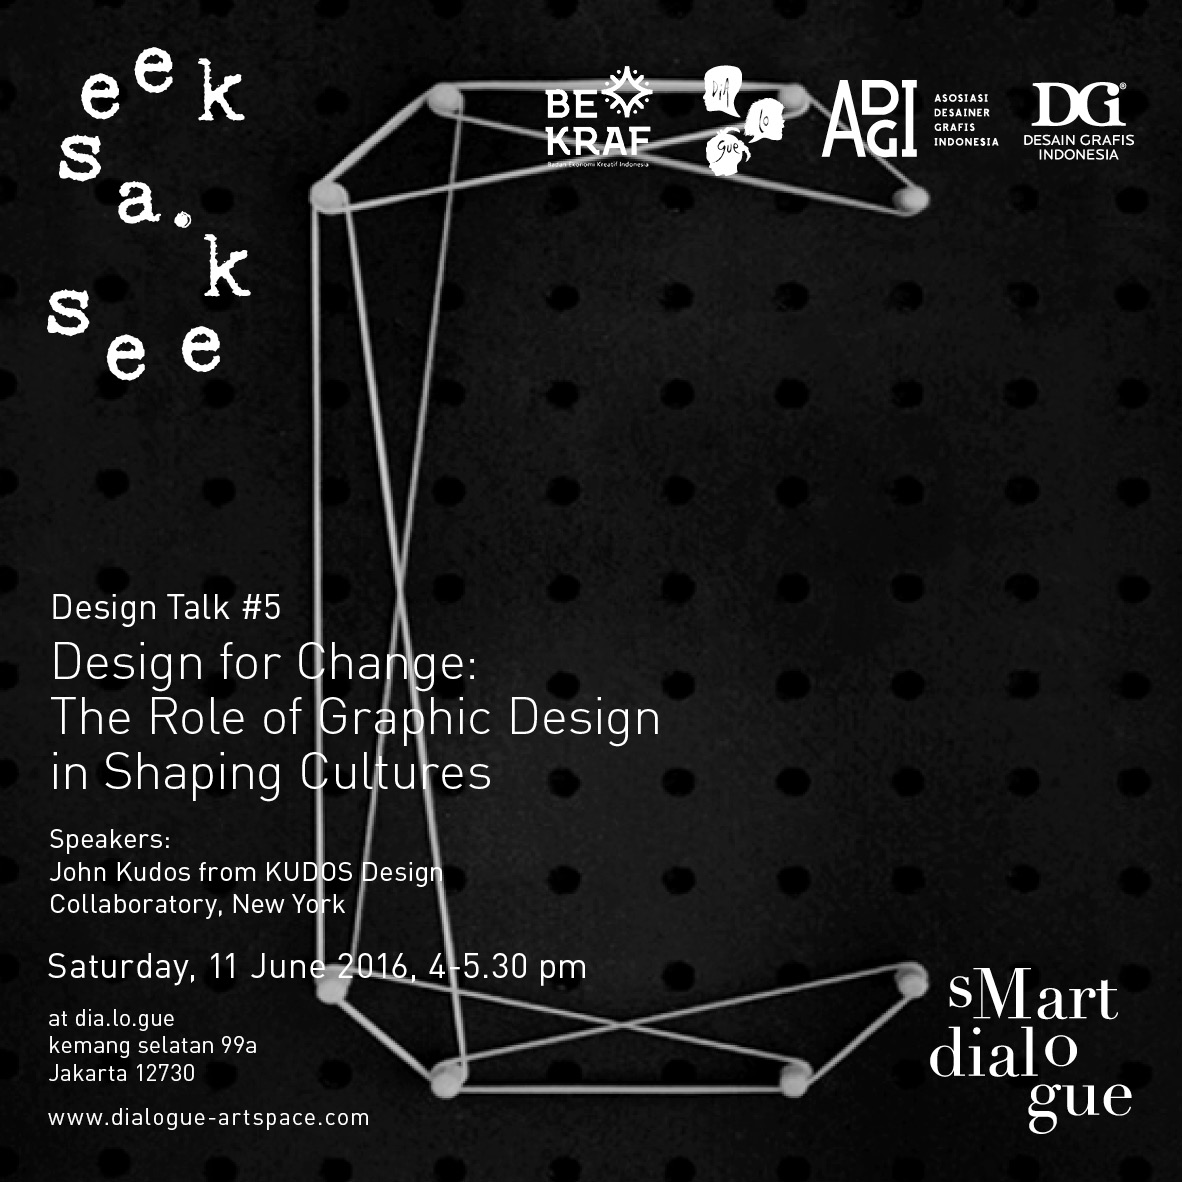 Seek-A-Seek-DesignTalk5-IG